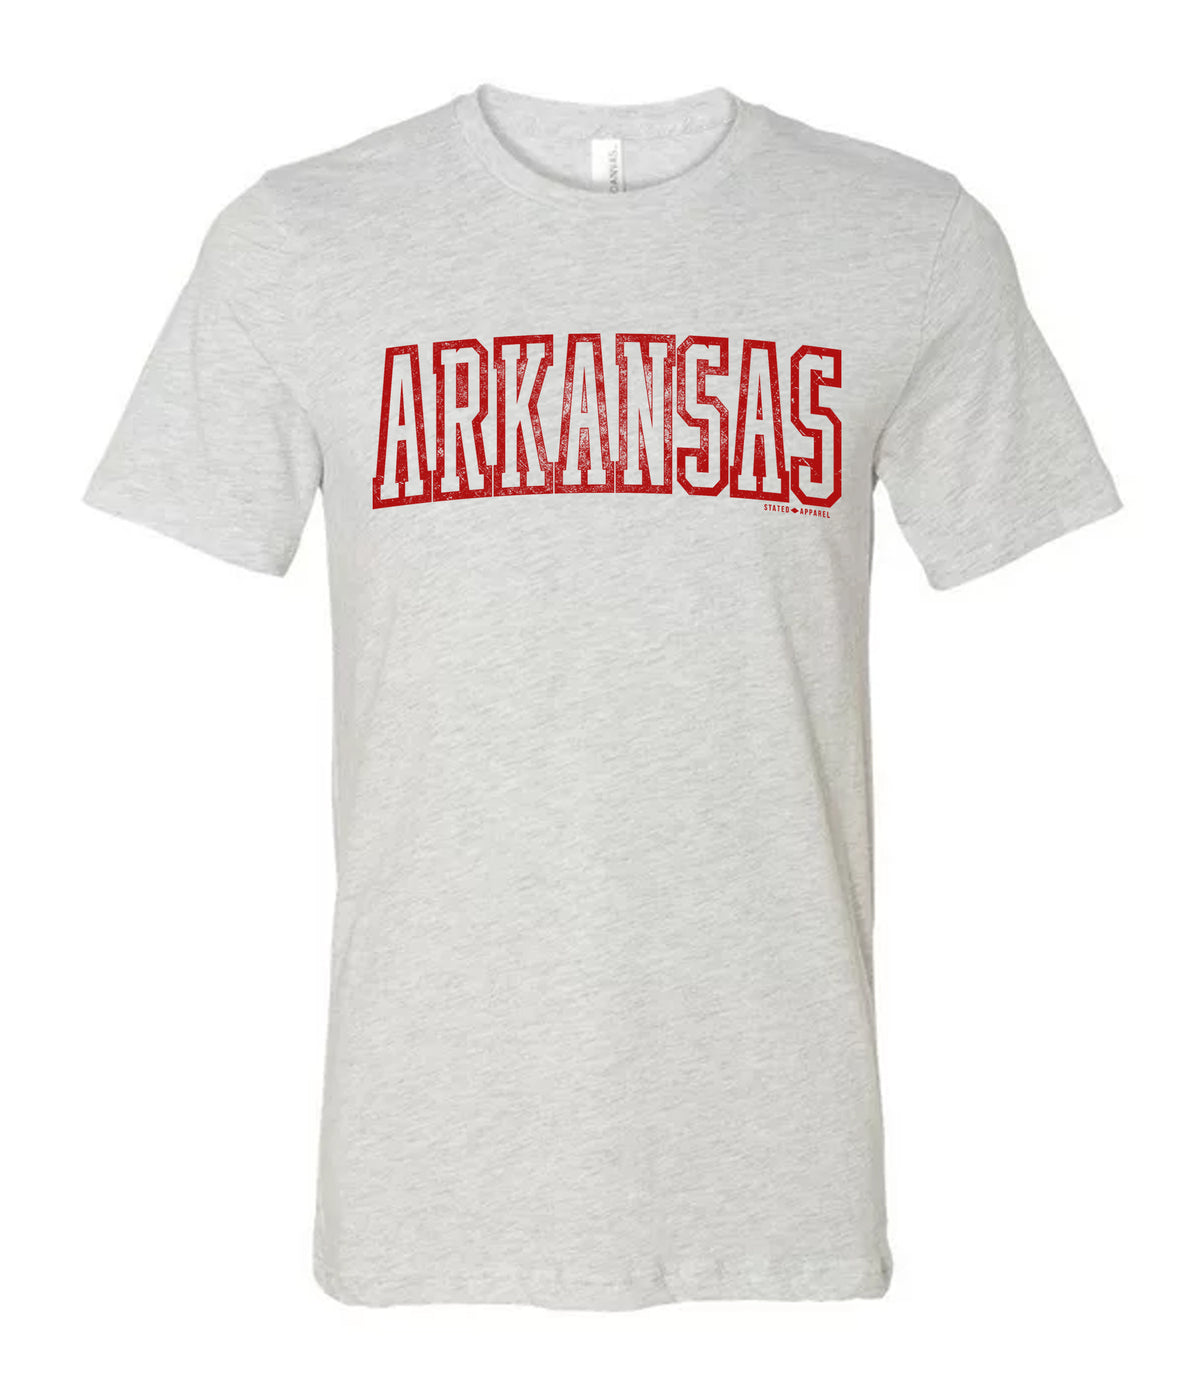 Arkansas Arch Outline T-Shirt